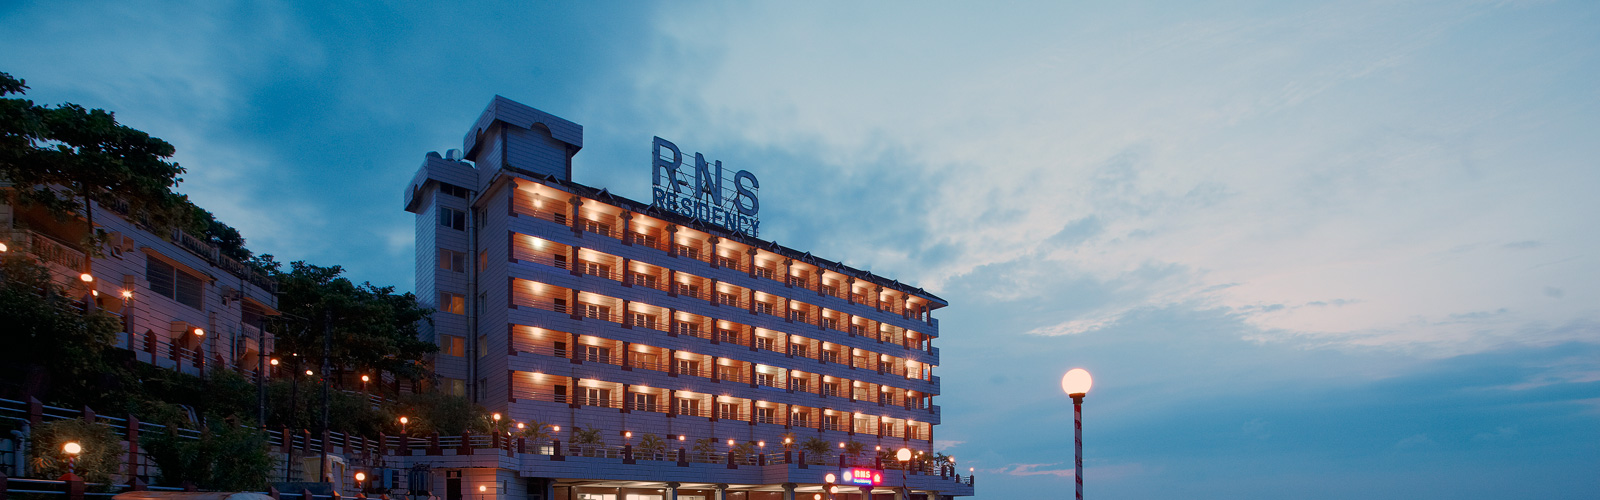 RNS Highway Hotel